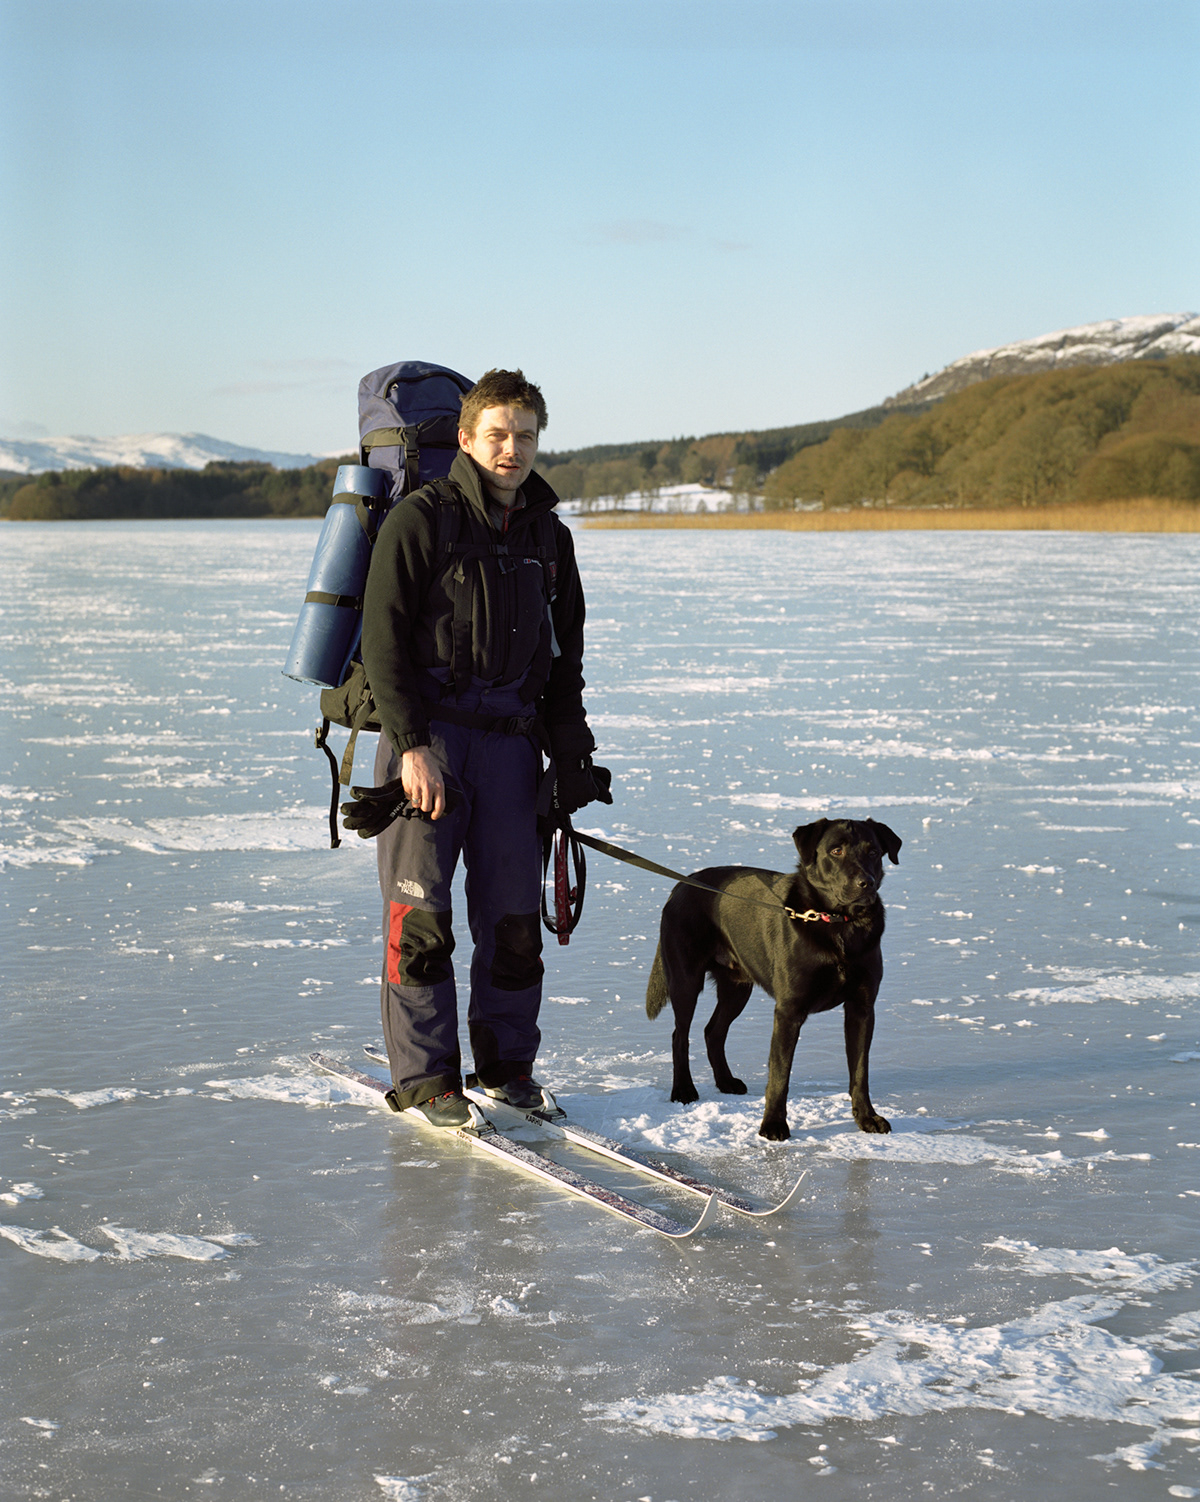 portraits lake of menteith scotland bonspeil curling frozen